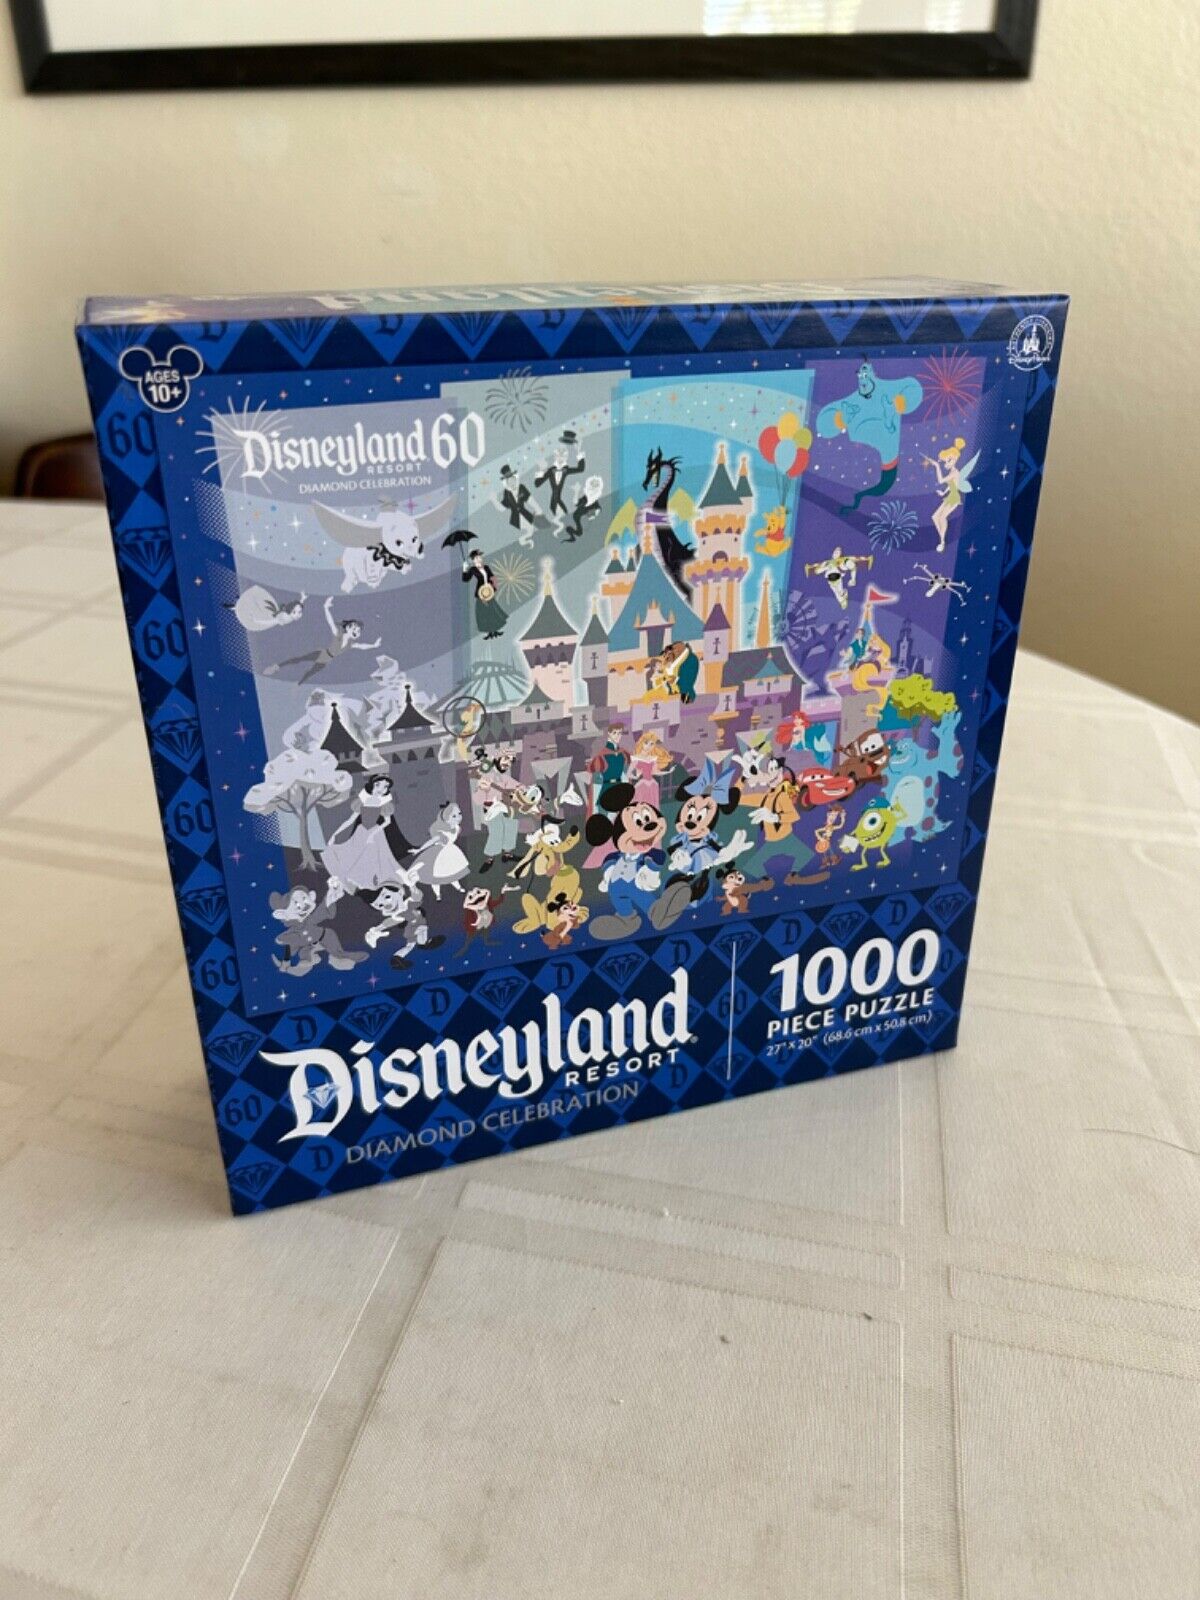 Disneyland Resort 60th celebration puzzle